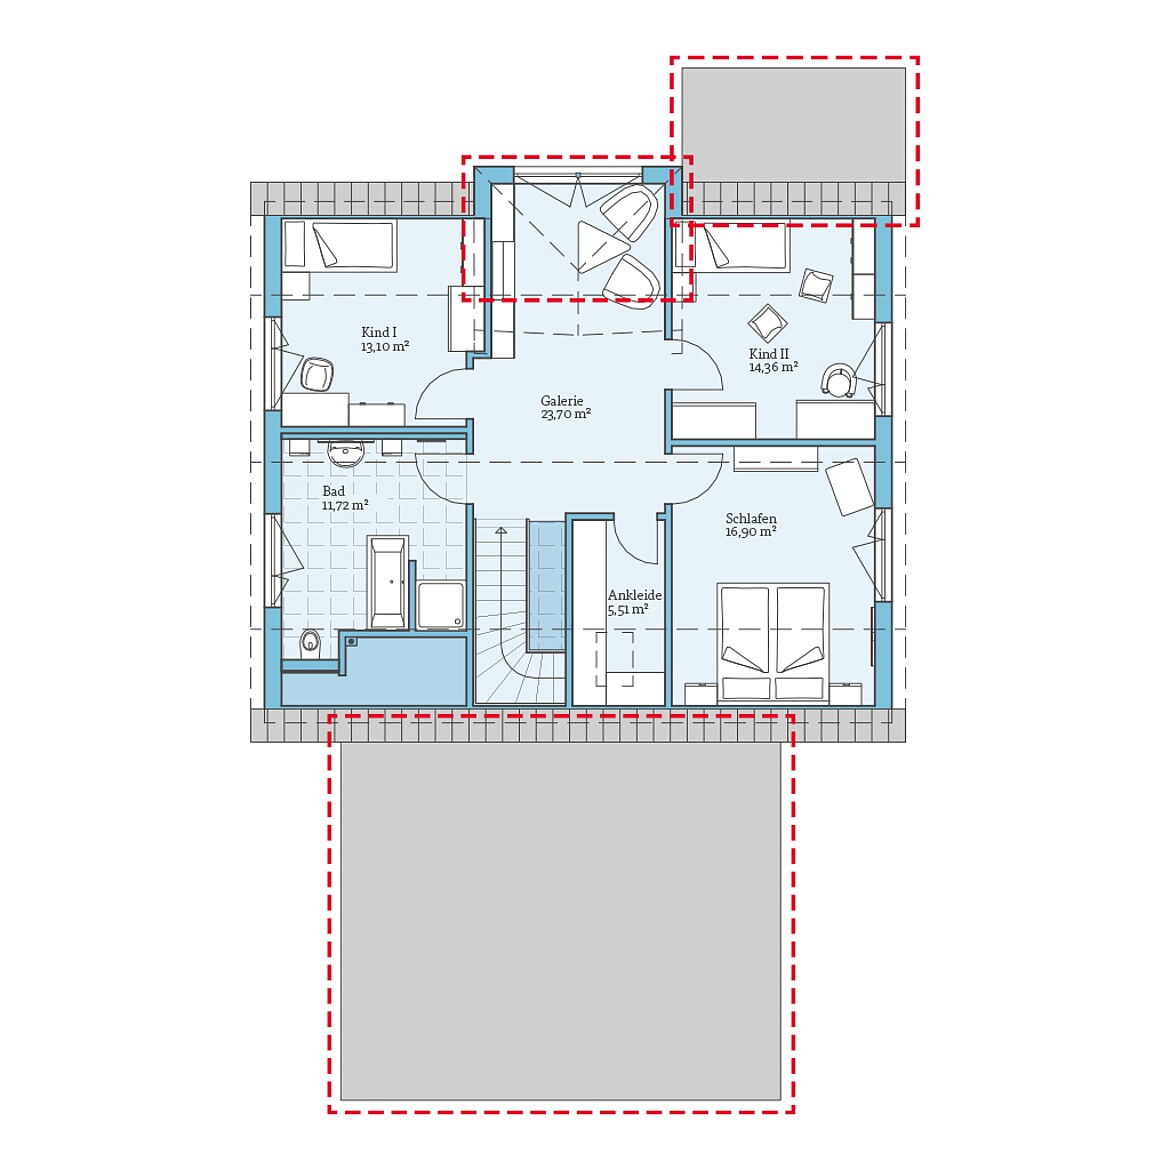 Prefabricated house Variant 35-172: Top floor plan option